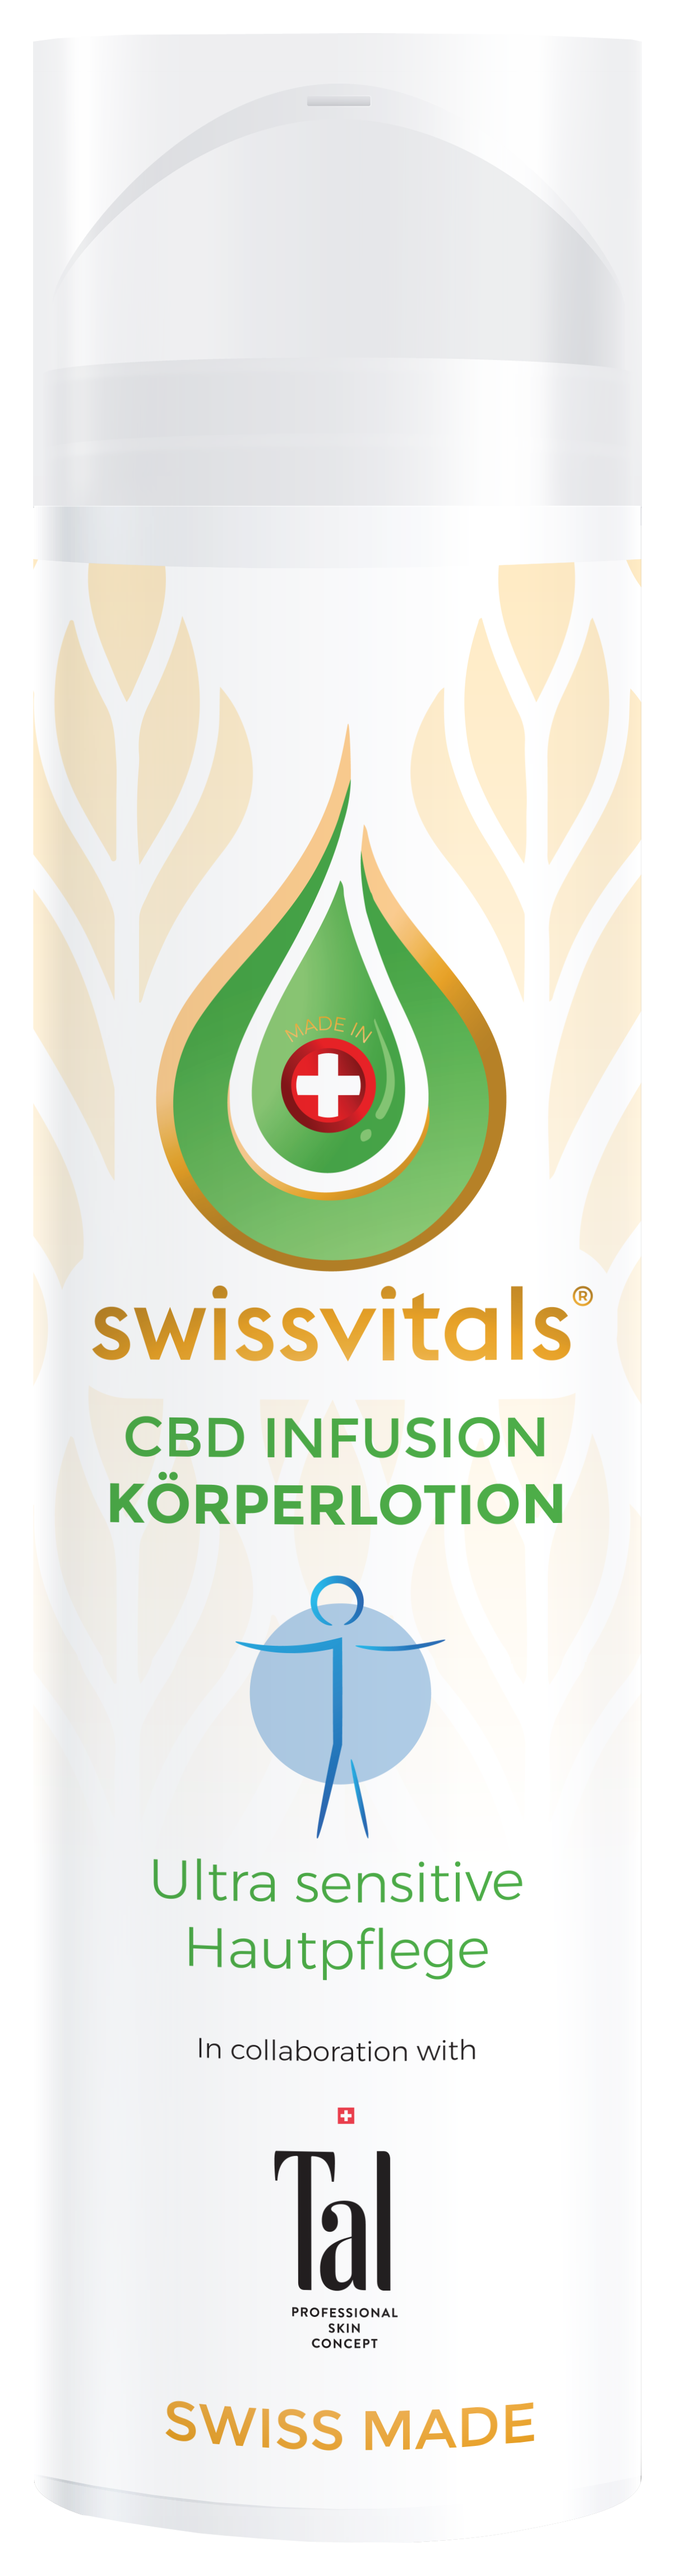 Image of Swissvitals Körperlotion mit CBD (200ml) bei CBD-Balance.ch